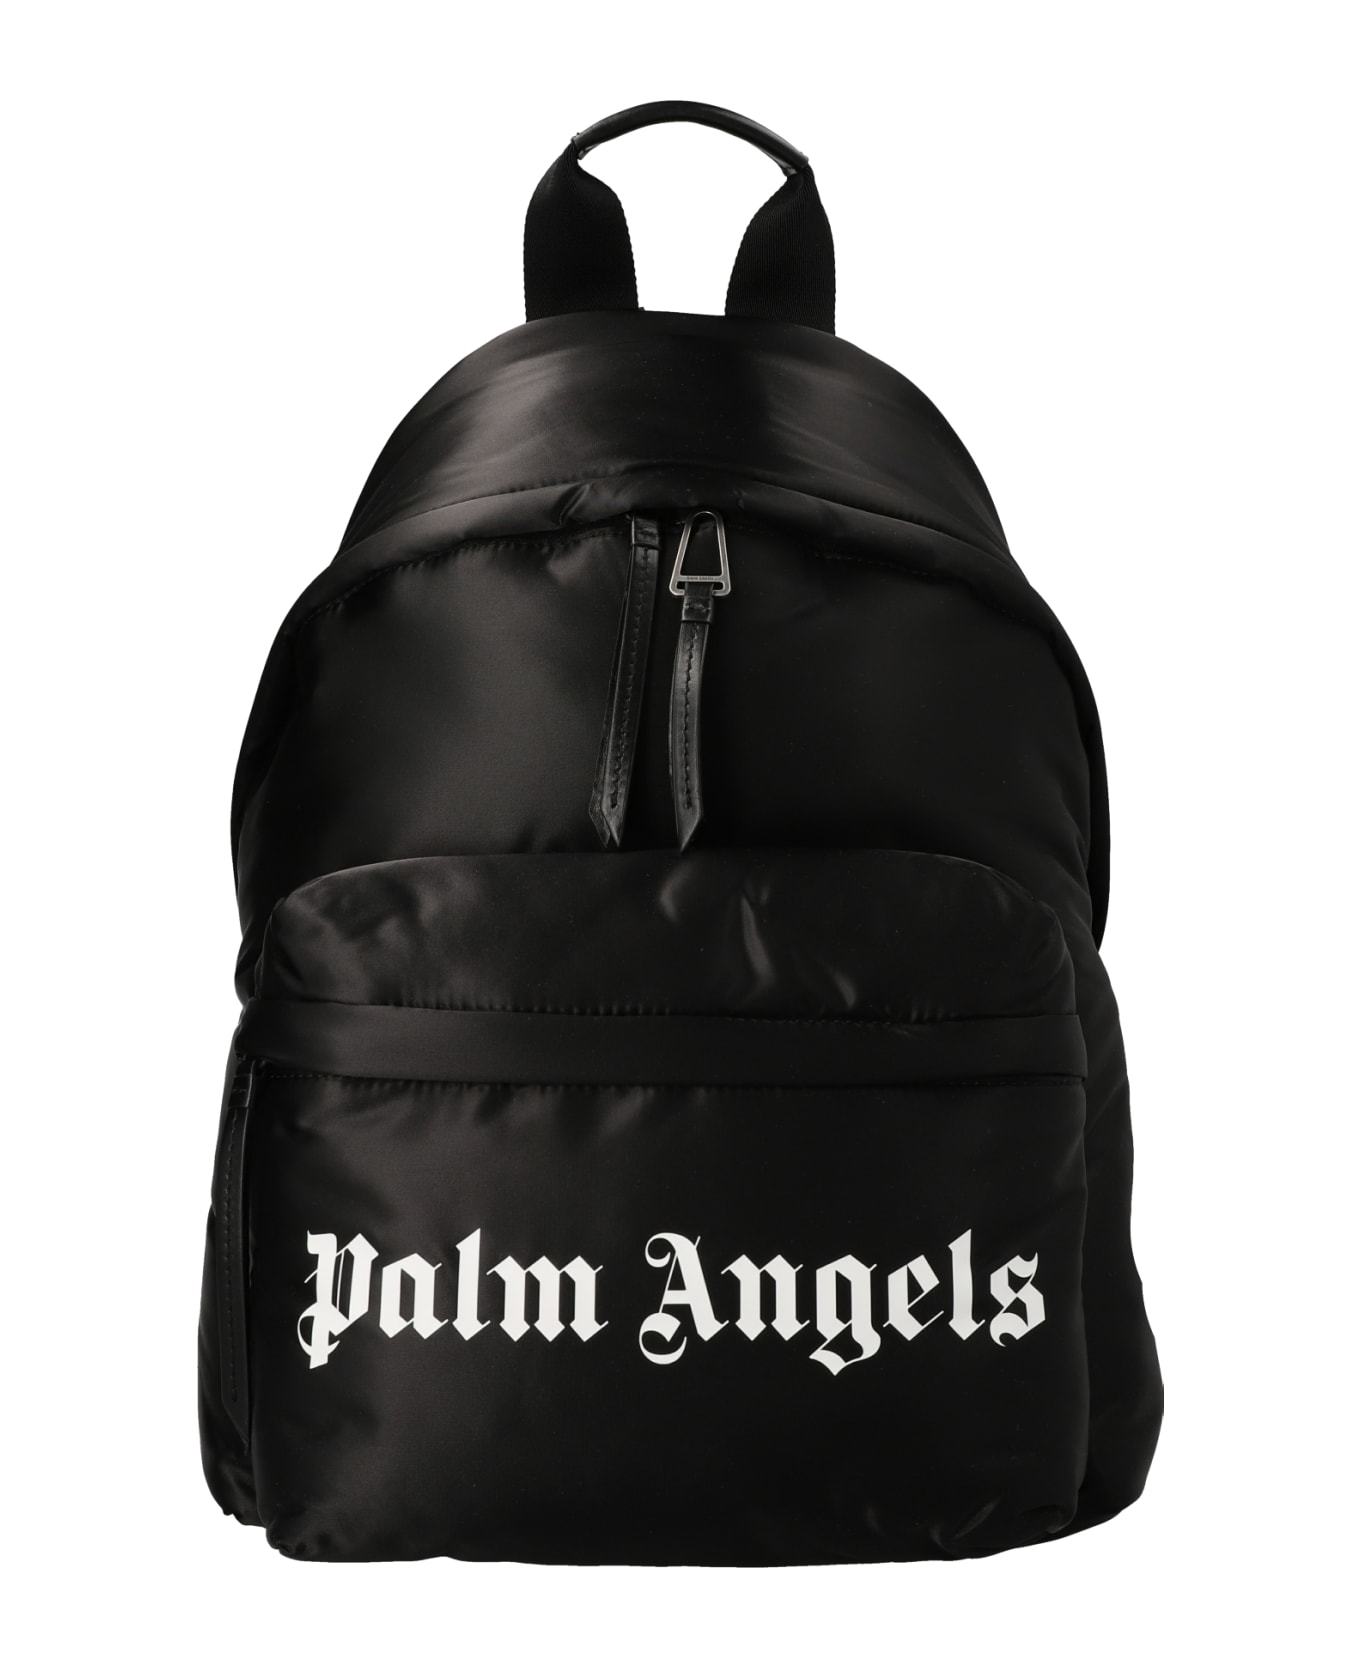 Palm Angels Logo Backpack - White/Black